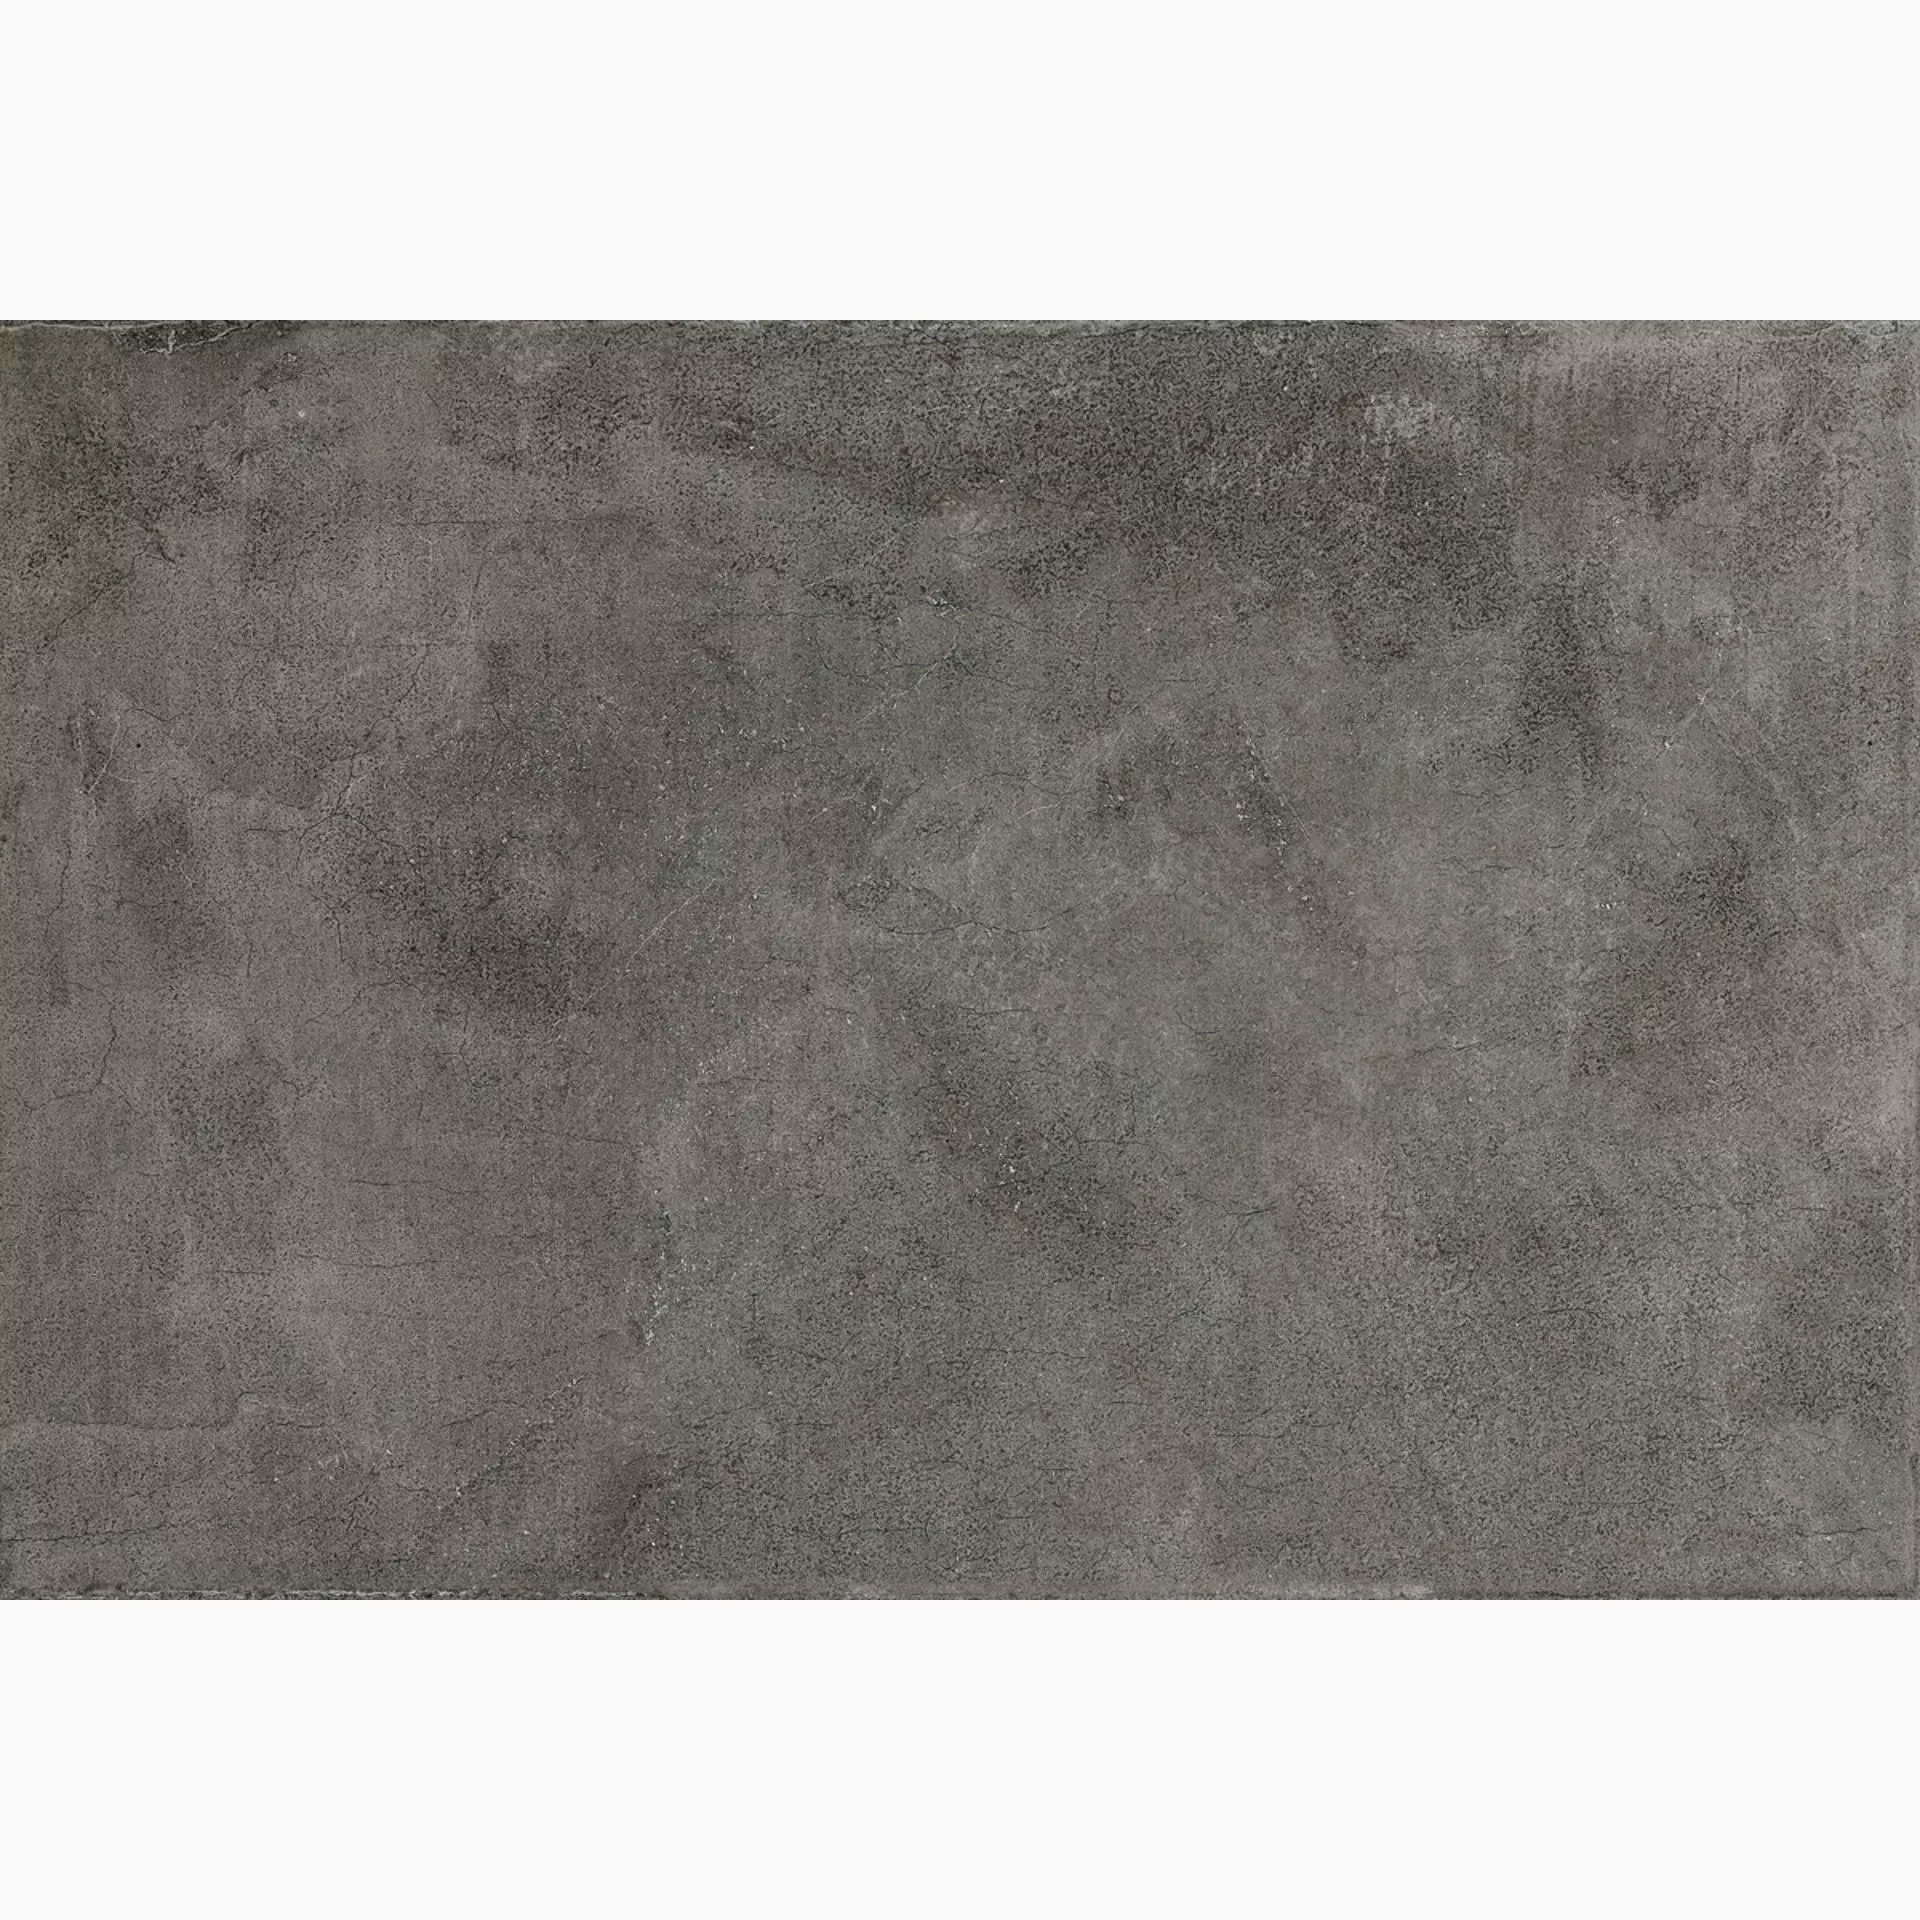 Sant Agostino Set Concrete Dark Antislip CSASCDA260 60,4x90,6cm rectified 20mm